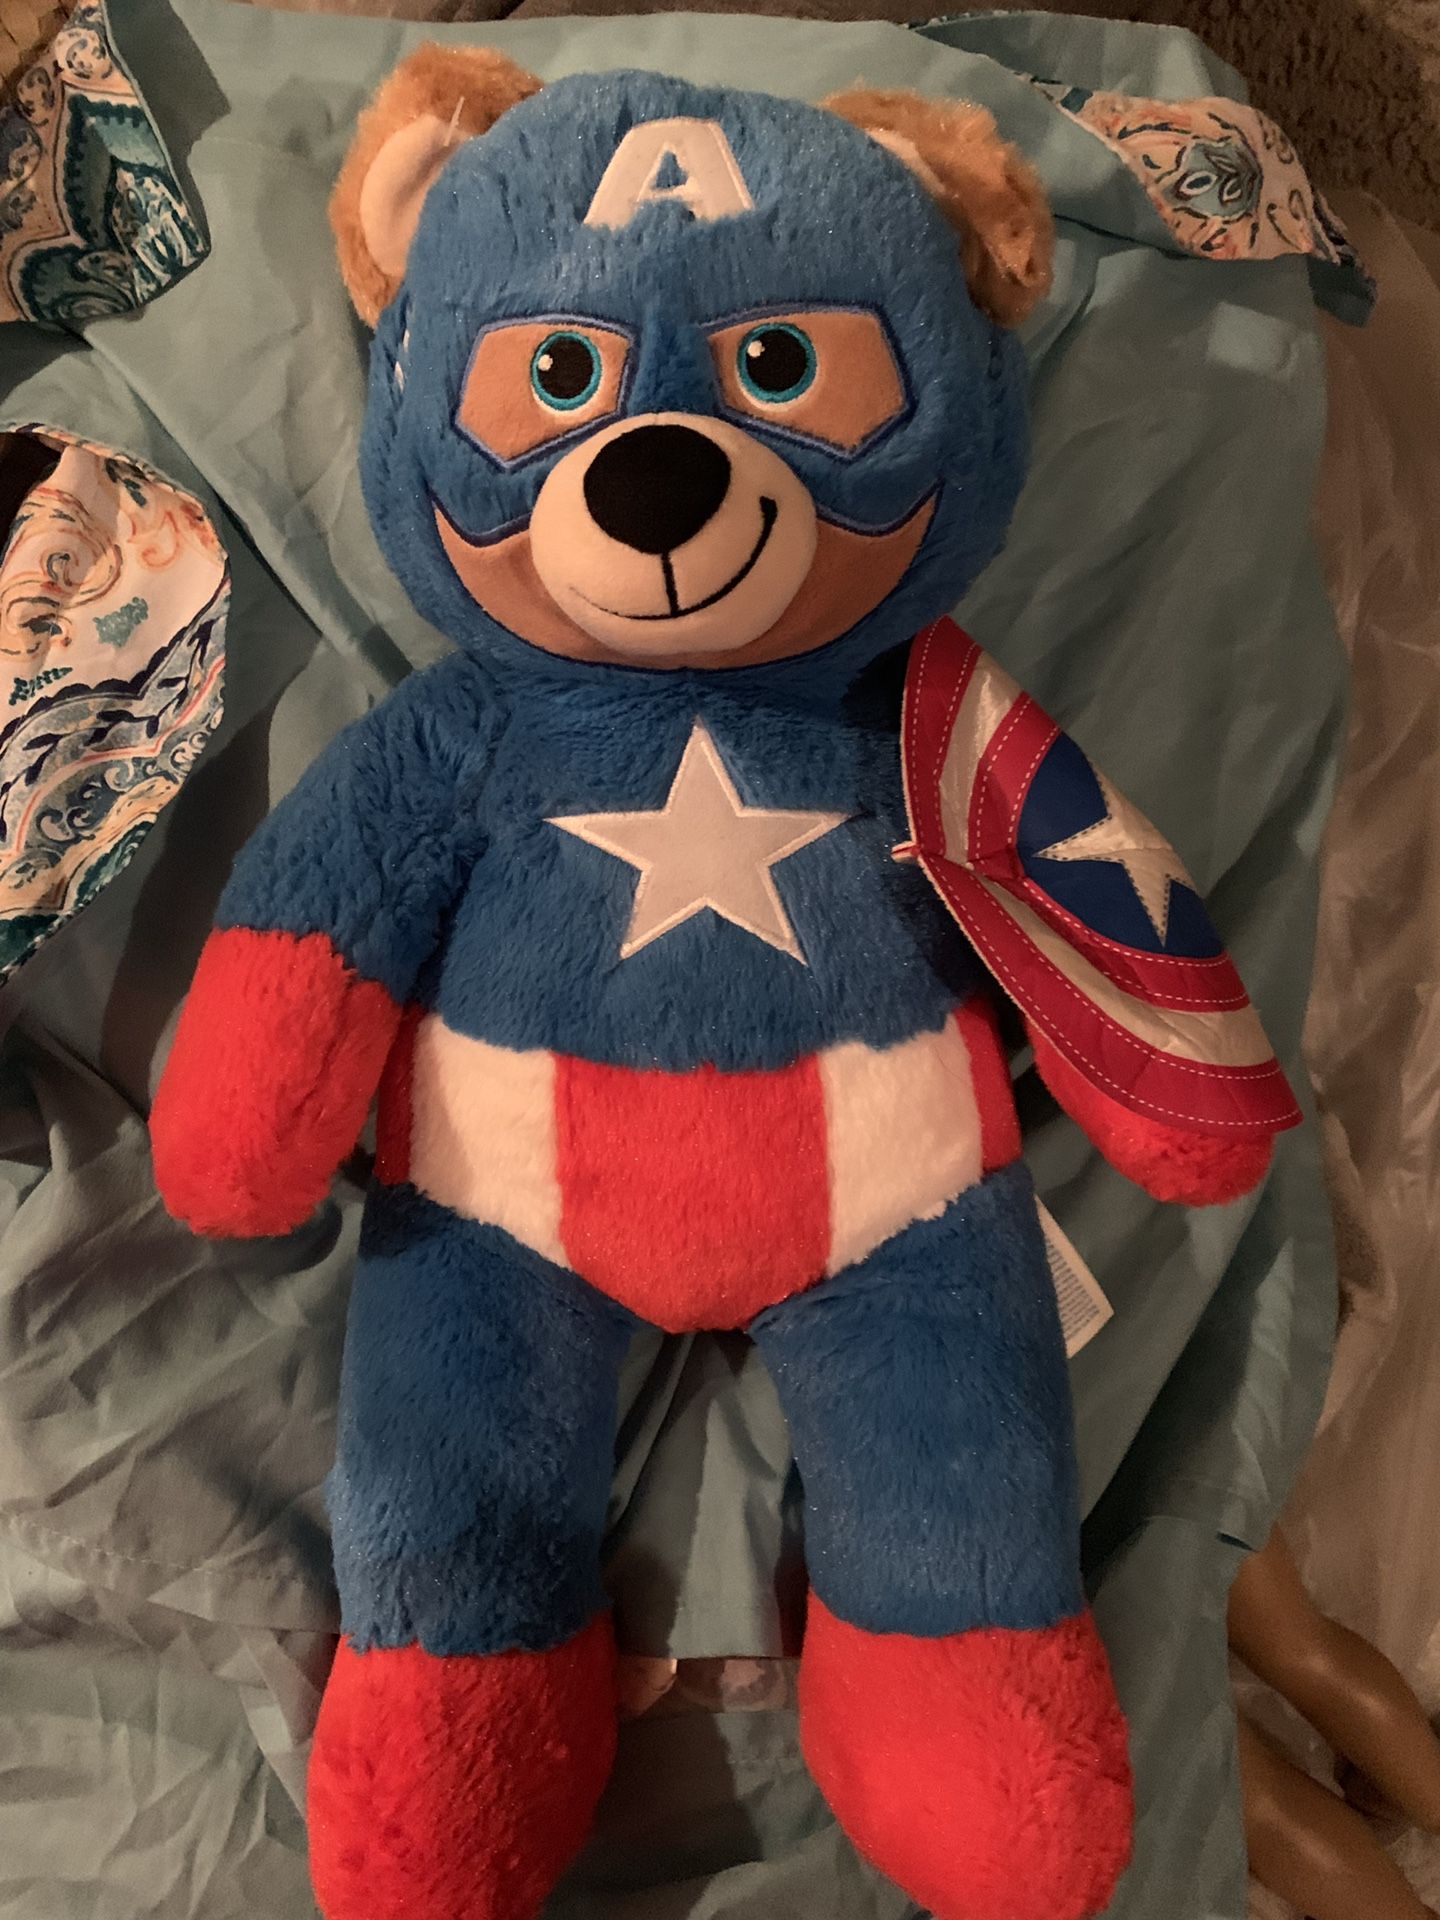 Captain America build a Bear plush